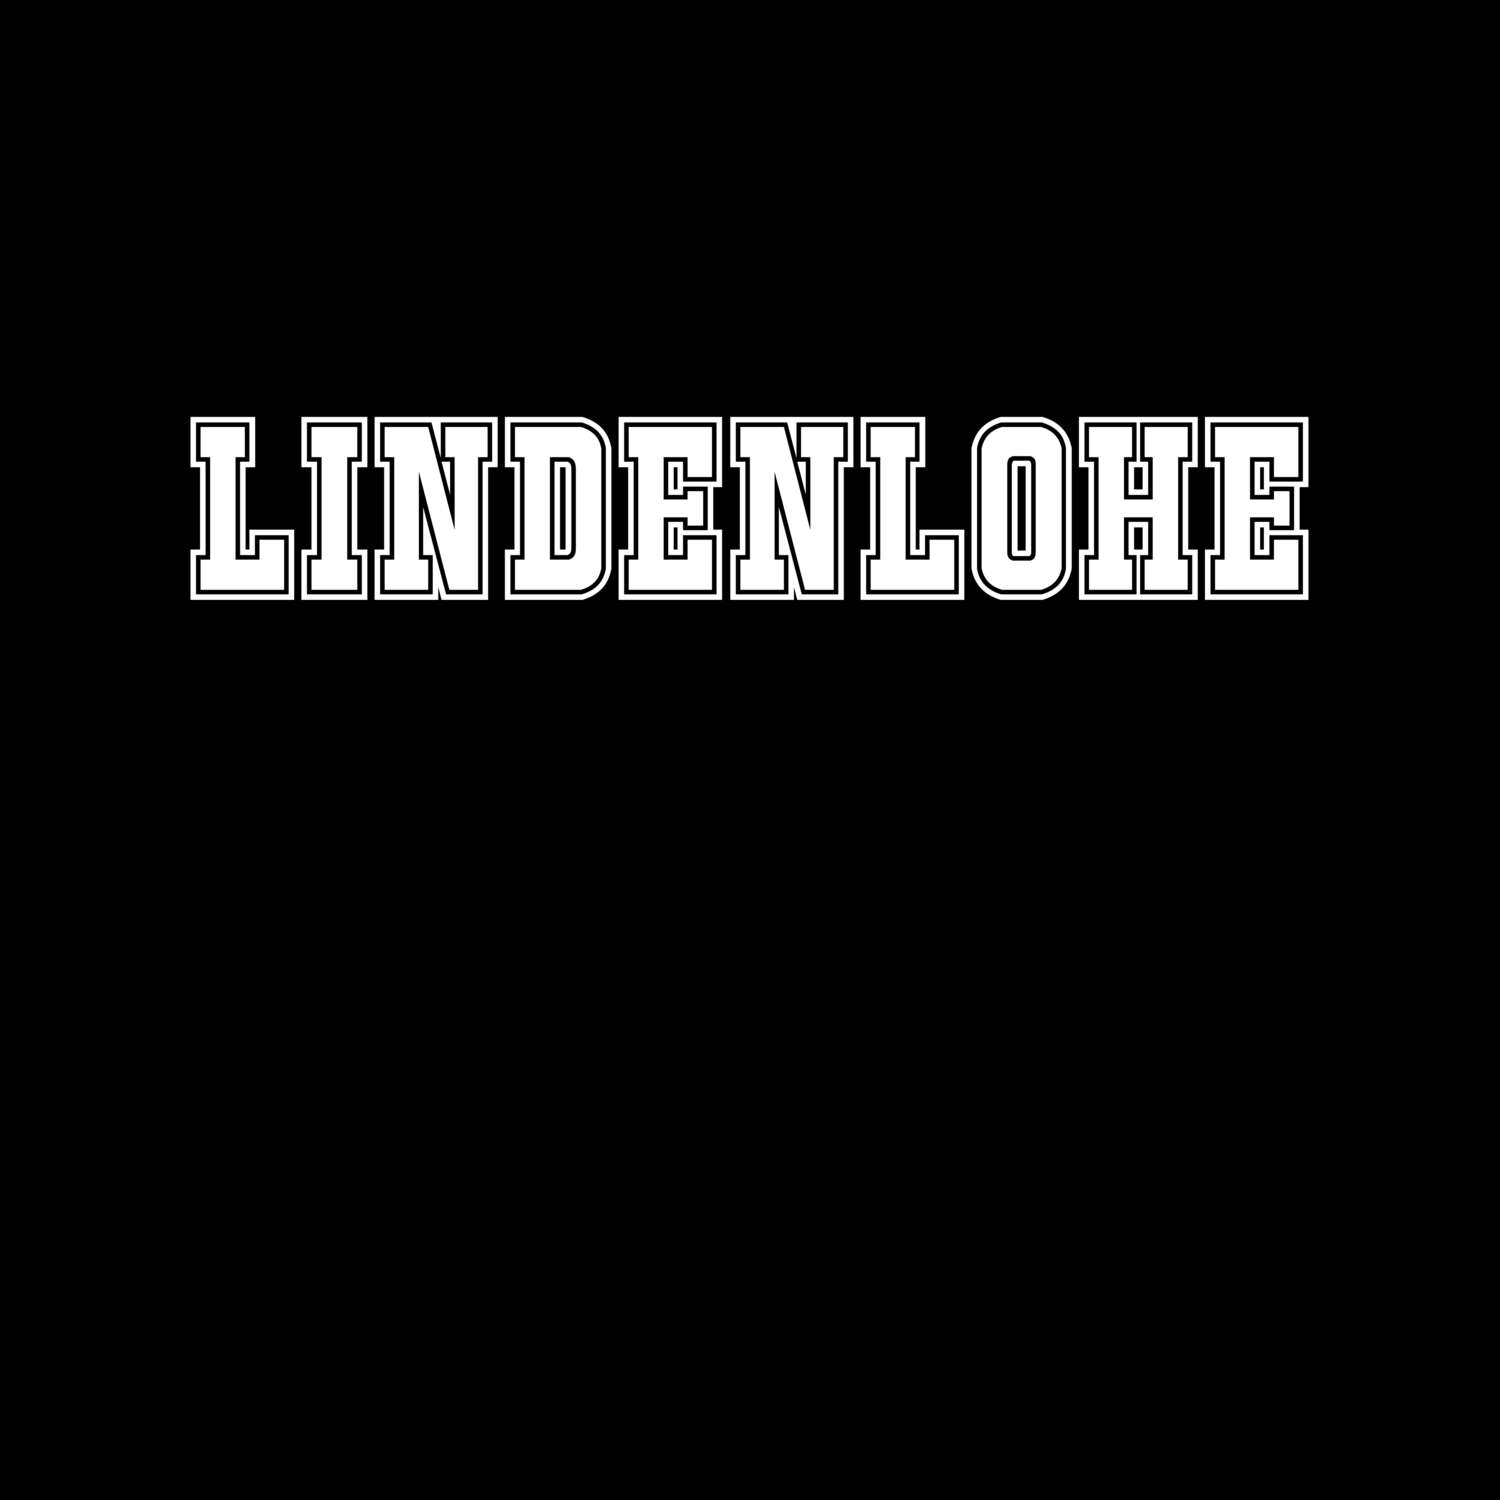 Lindenlohe T-Shirt »Classic«